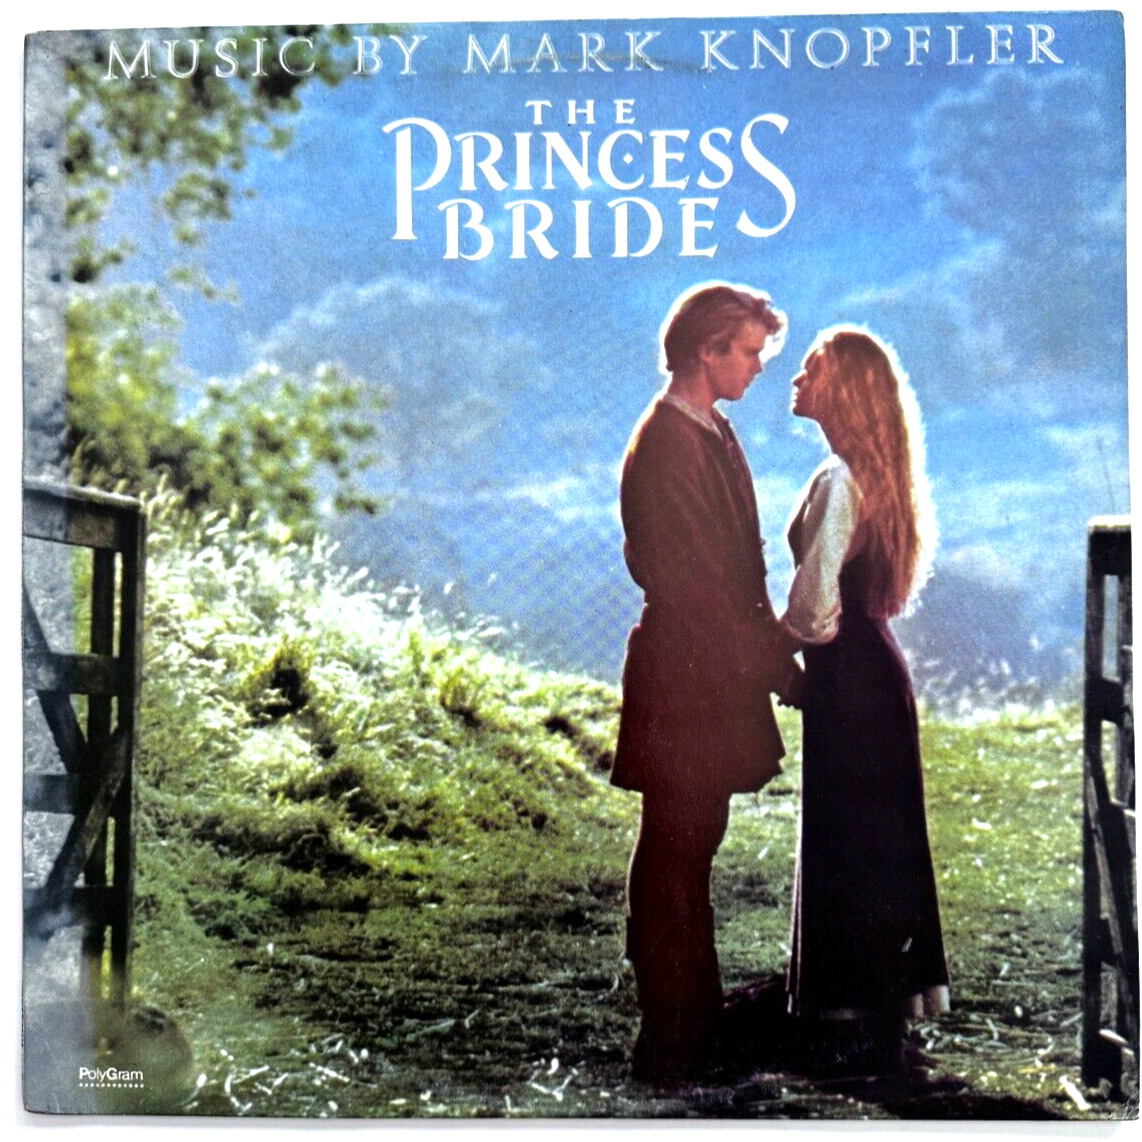 Mark Knopfler - The Princess Bride - RARE LP ARGENTINA VINYL